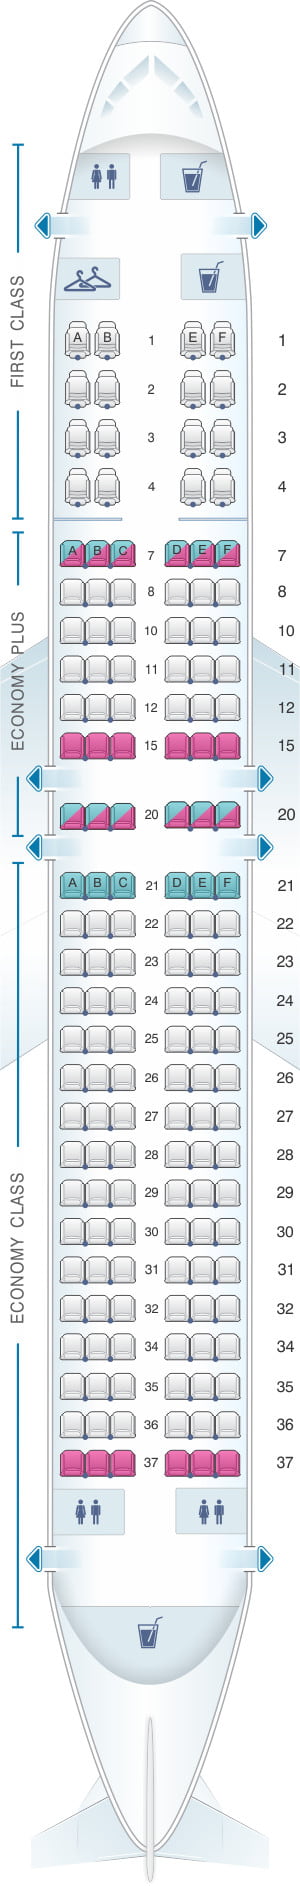 United 737 MAX 8 Seat Map - Airportix